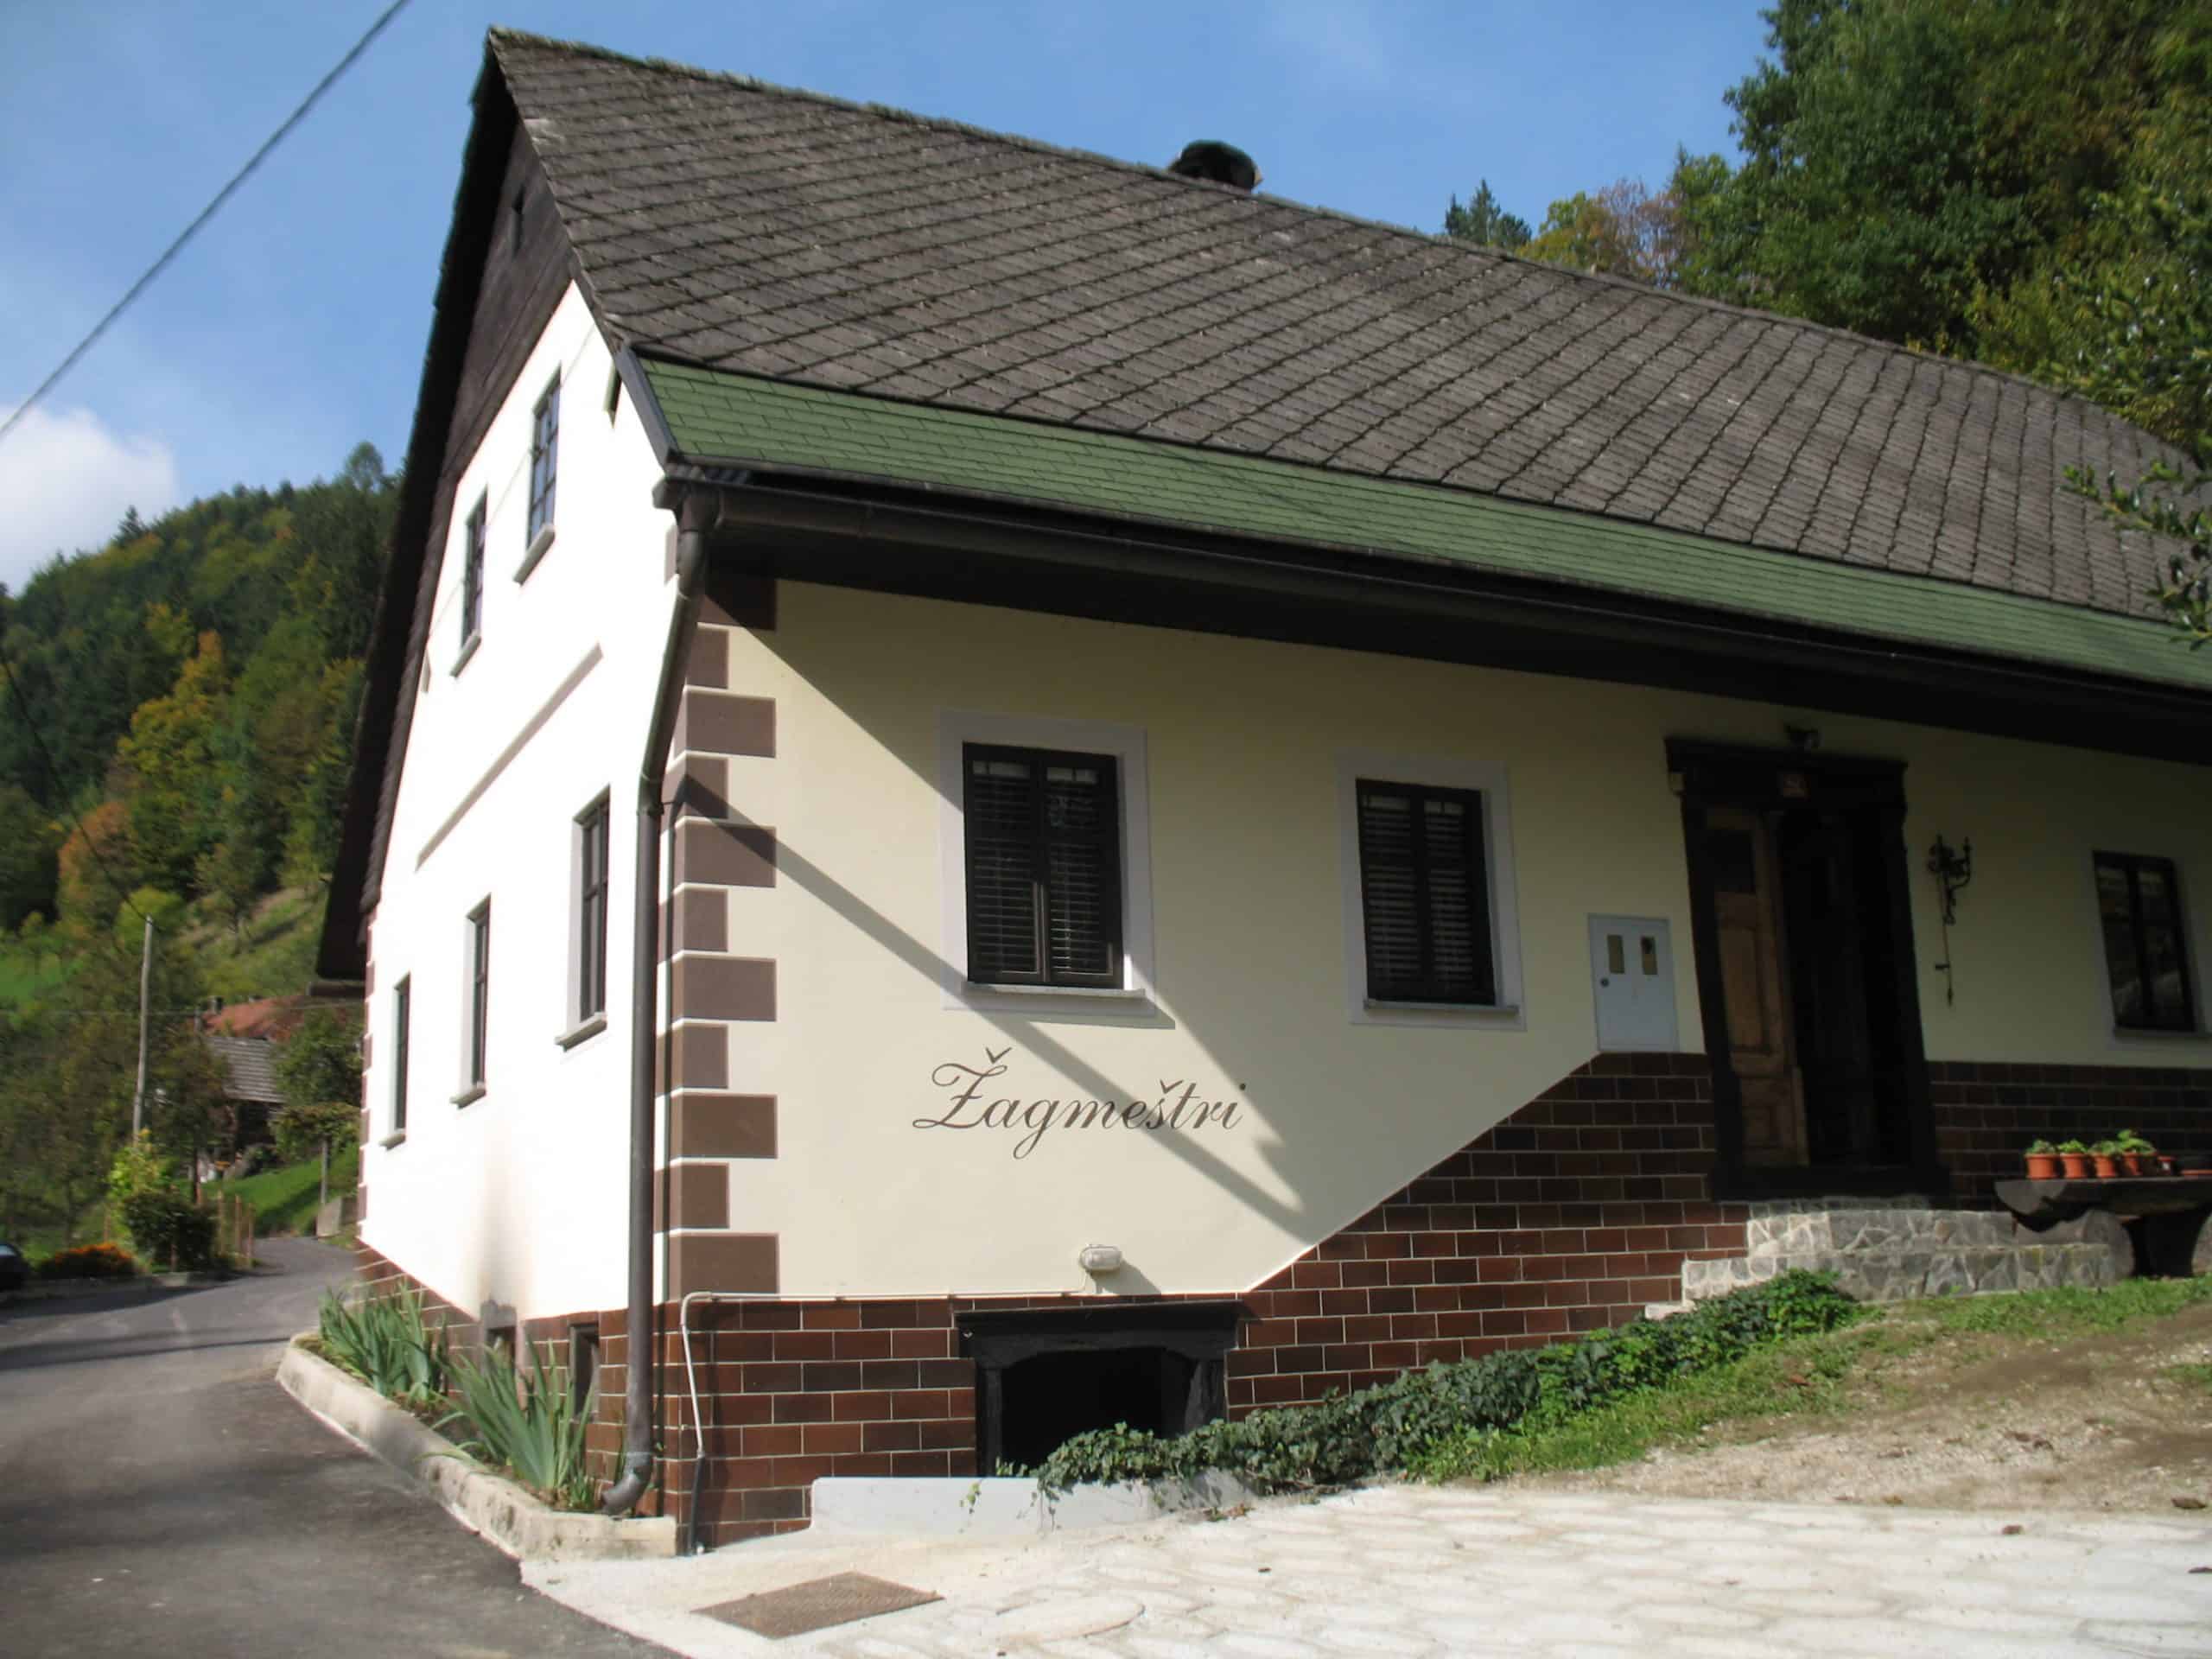 Holiday Home Zagmestri in Slovenia